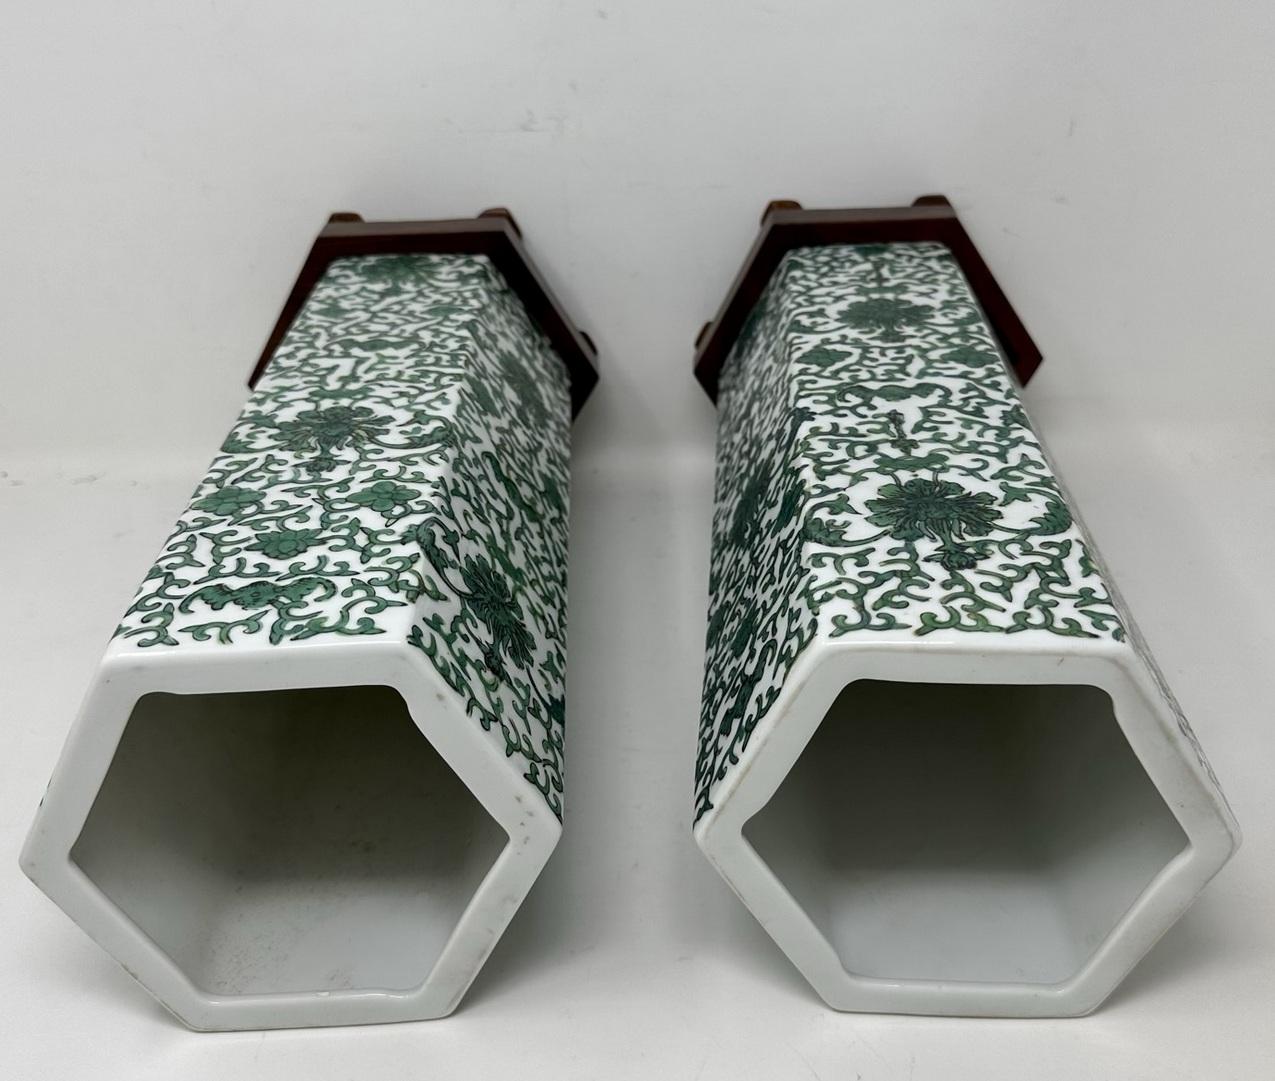 Antique Pair Chinese Export Porcelain Urns Vases Carved Hardwood Base Green 19Ct For Sale 3